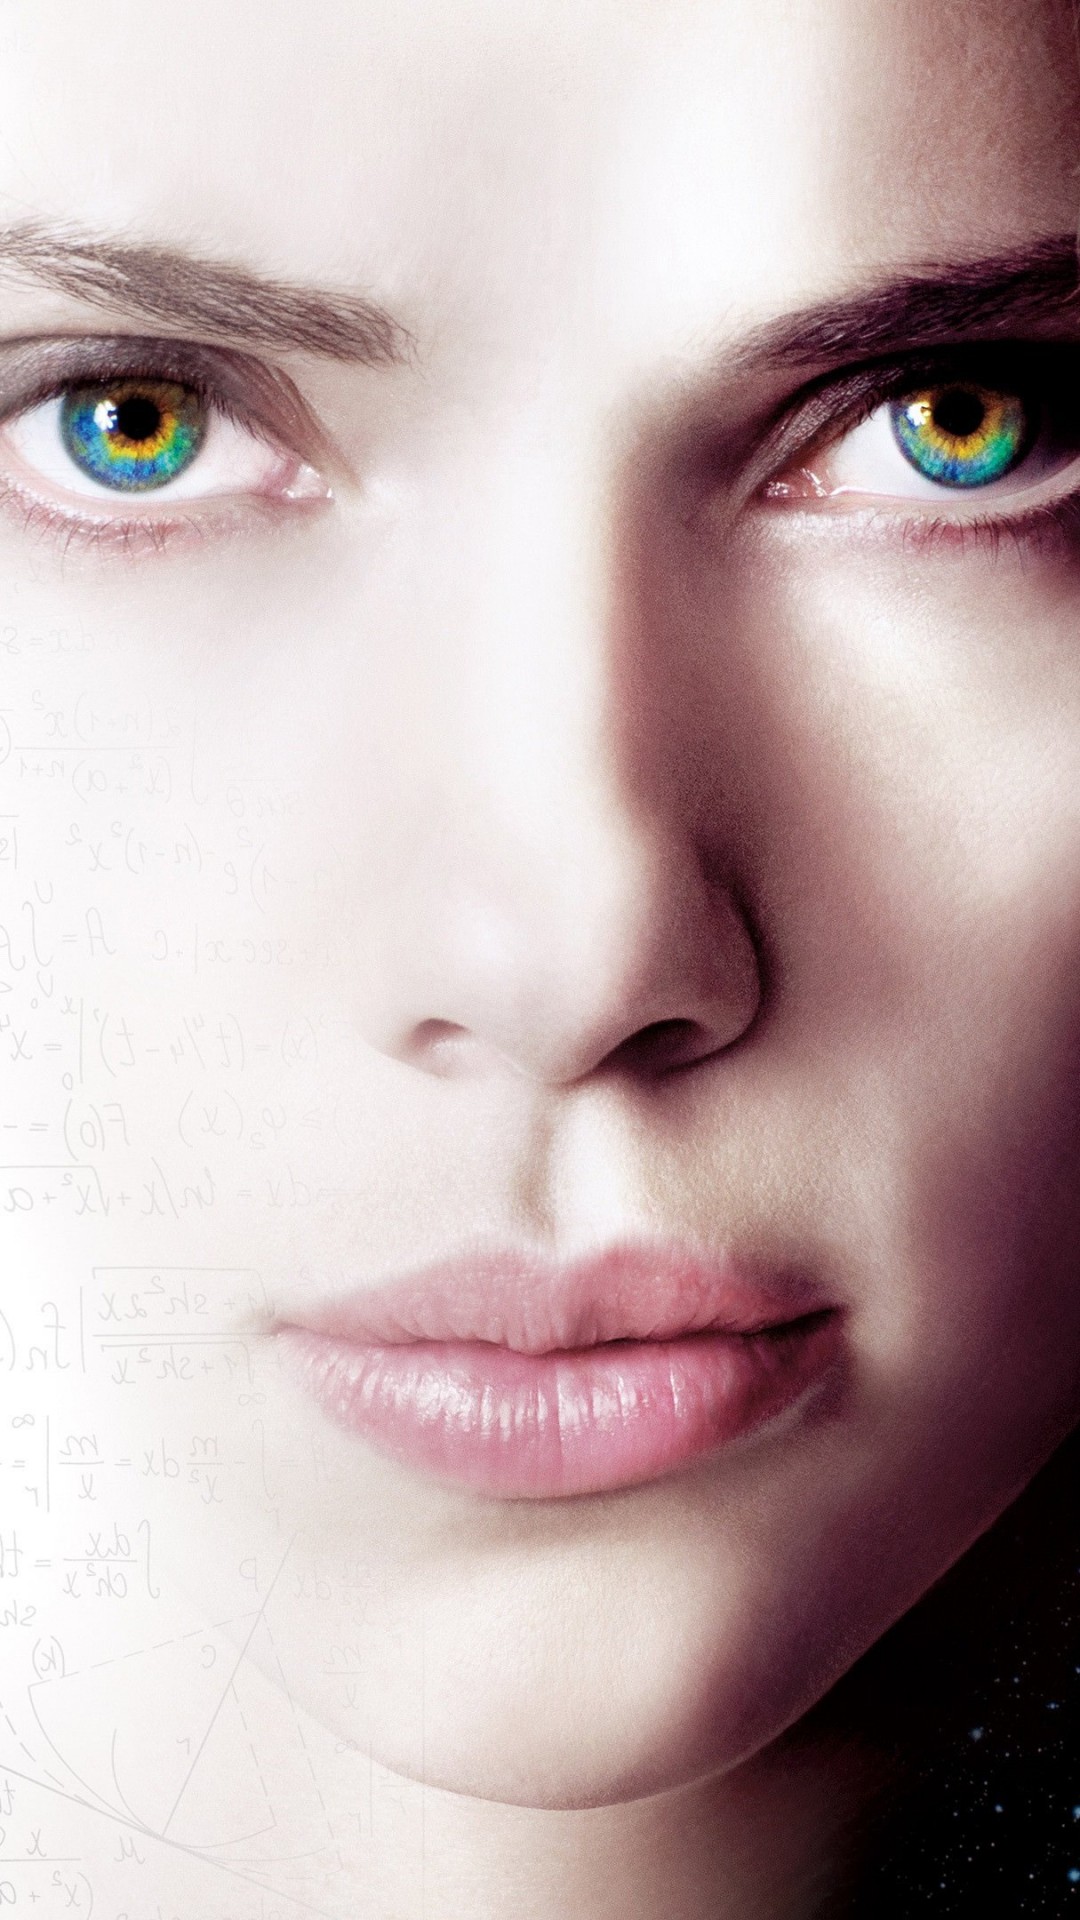 Scarlett Johansson As Lucy Wallpaper for Google Nexus 5